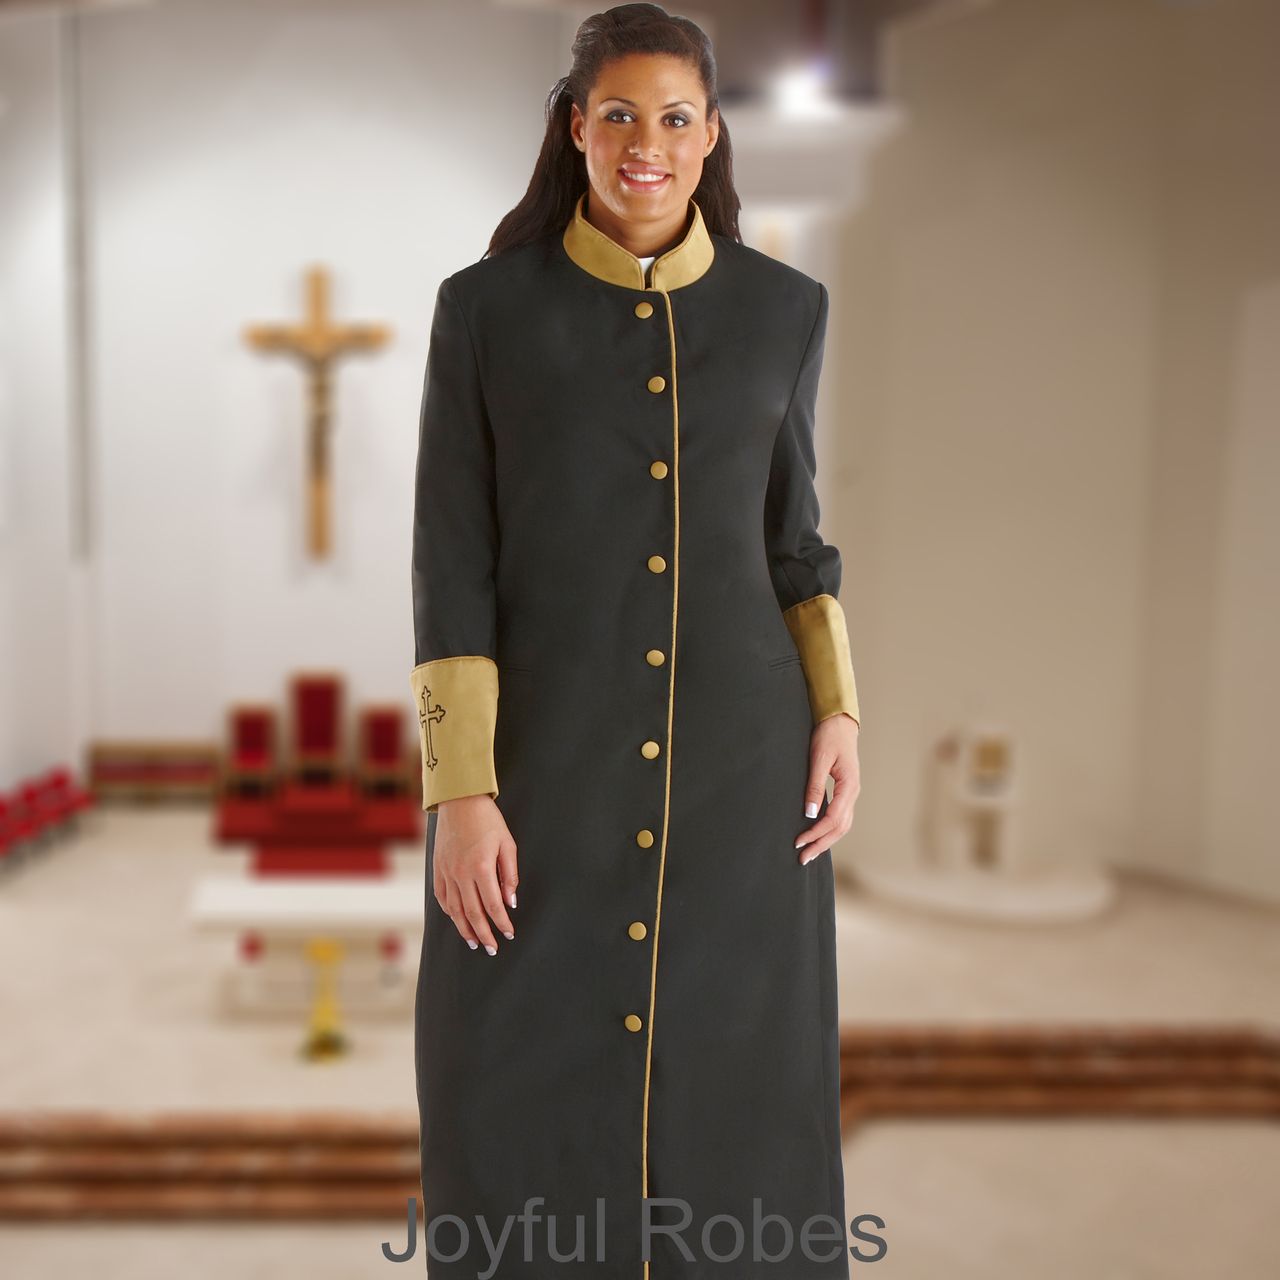 301 W. Women's Clergy/Pastor Robe Black/Gold Cuff